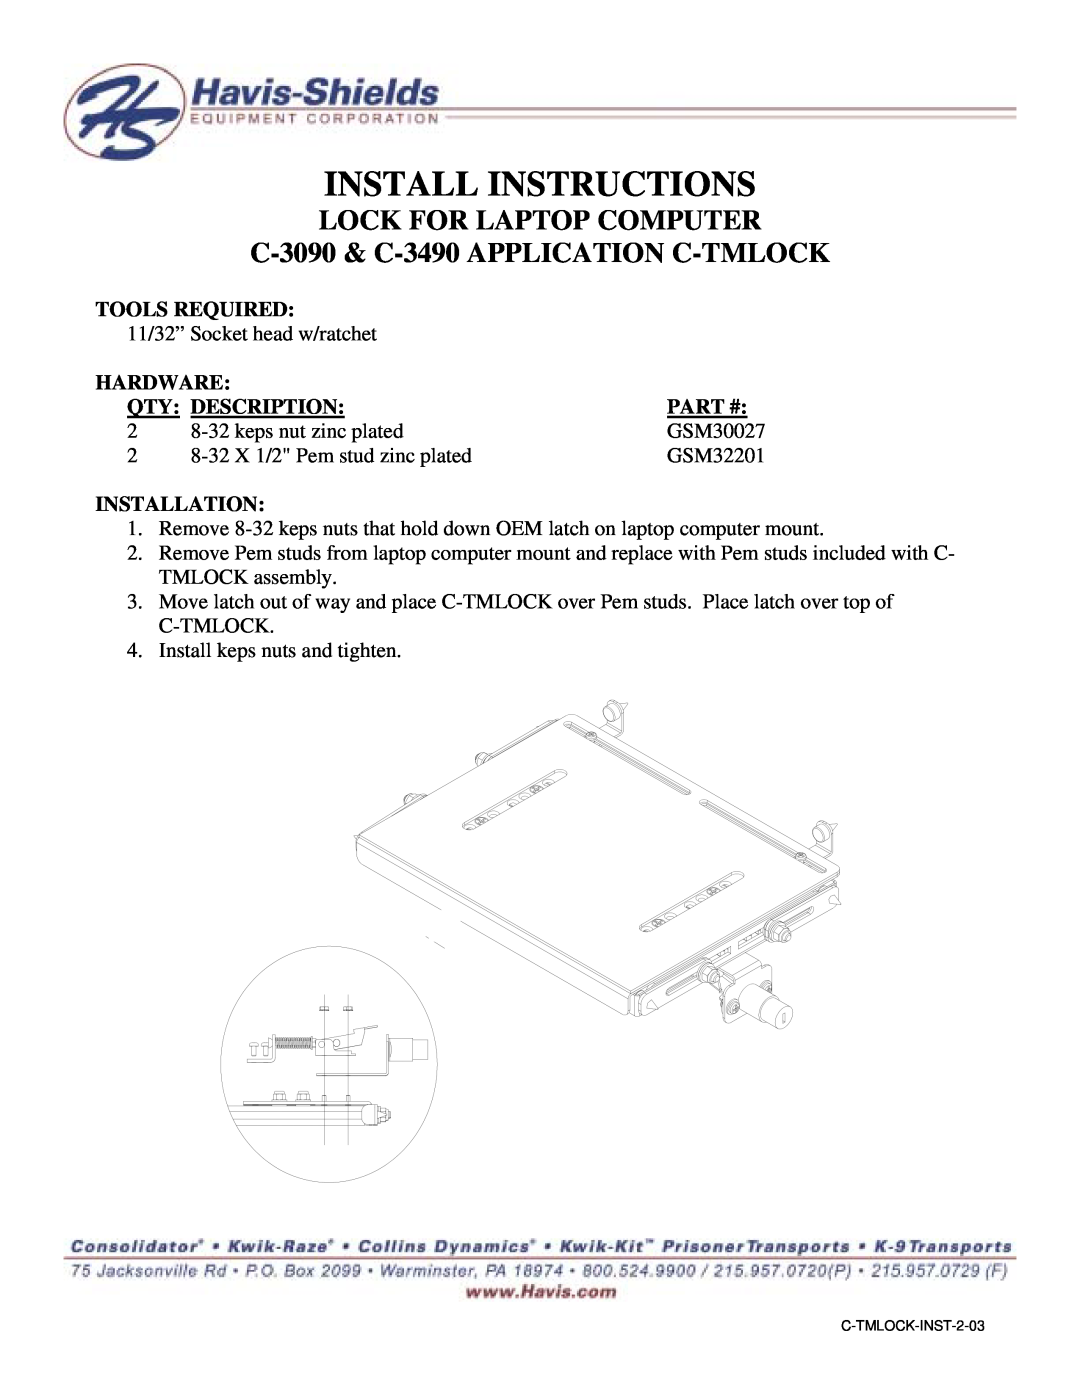 Havis-Shields manual Install Instructions, LOCK FOR LAPTOP COMPUTER C-3090 & C-3490 APPLICATION C-TMLOCK, Hardware 